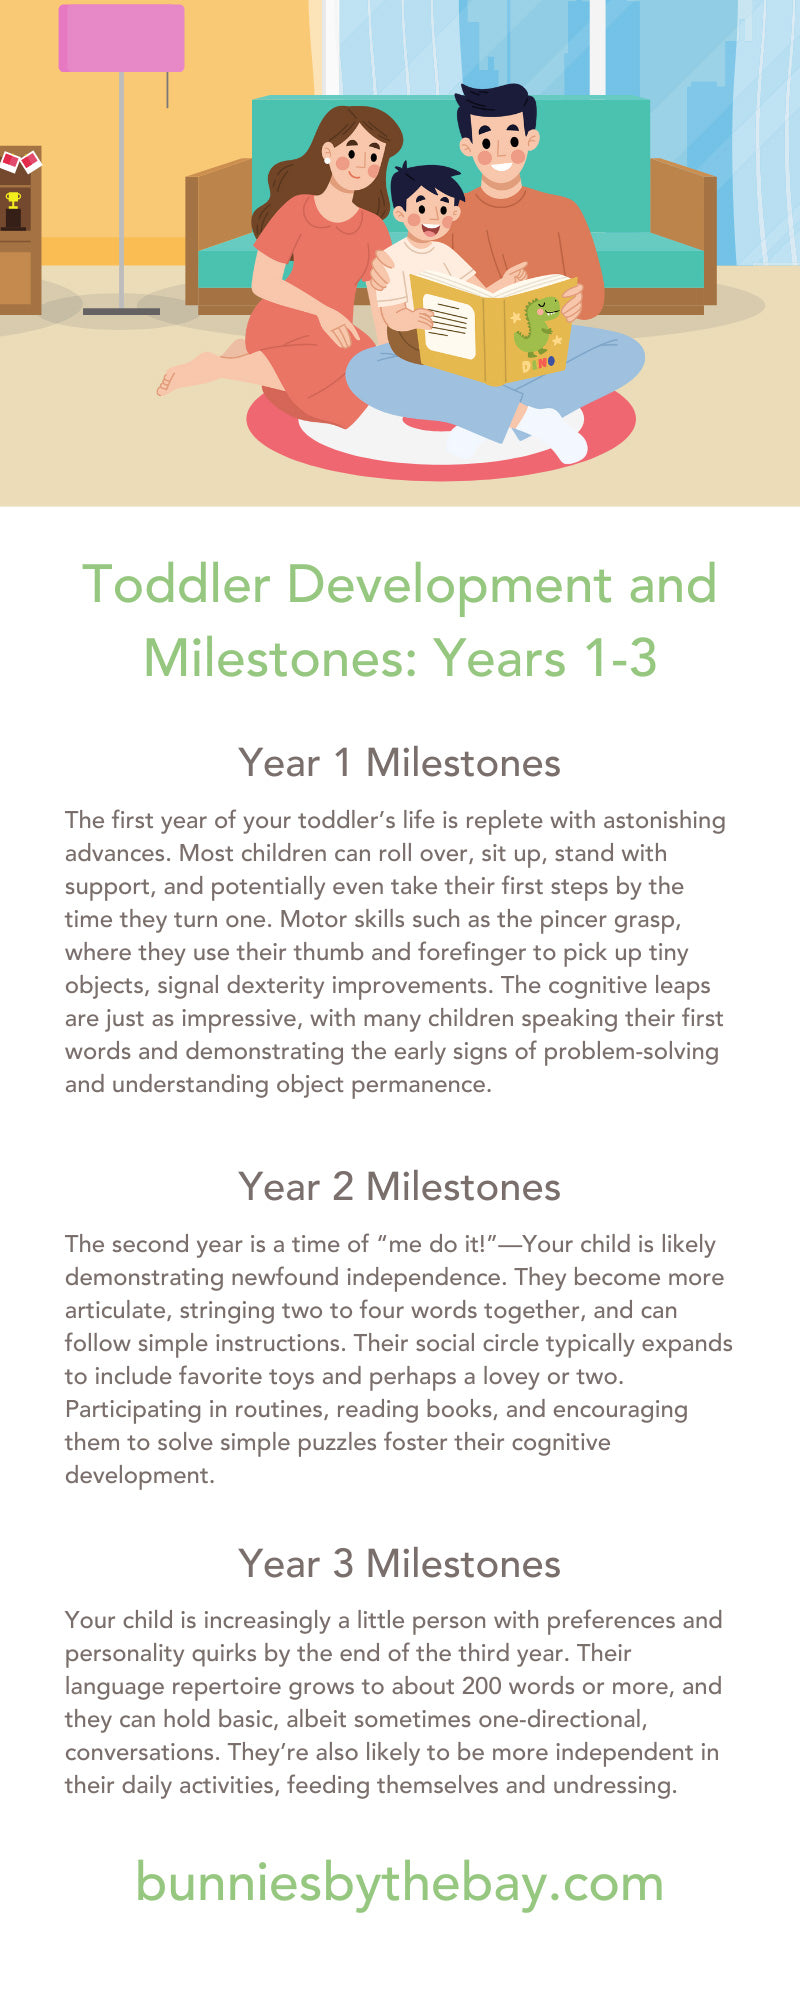 Toddler Development and Milestones: Years 1-3